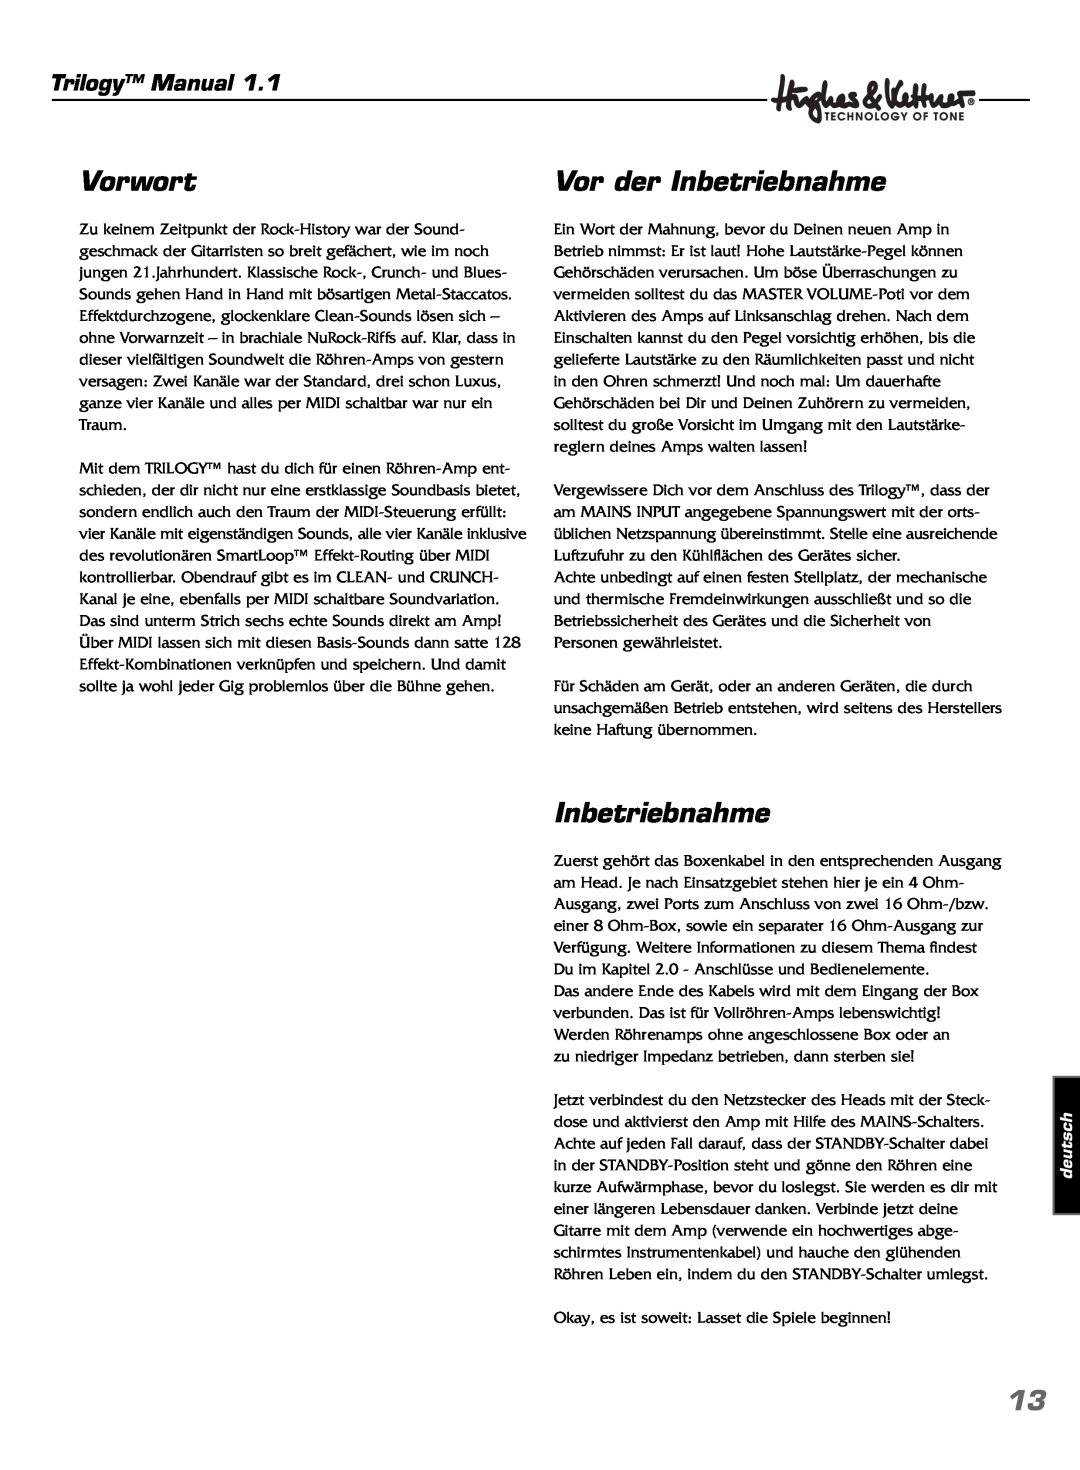 Hughes & Kettner TrilogyTM manual Vorwort, Vor der Inbetriebnahme, deutsch, Trilogy Manual 